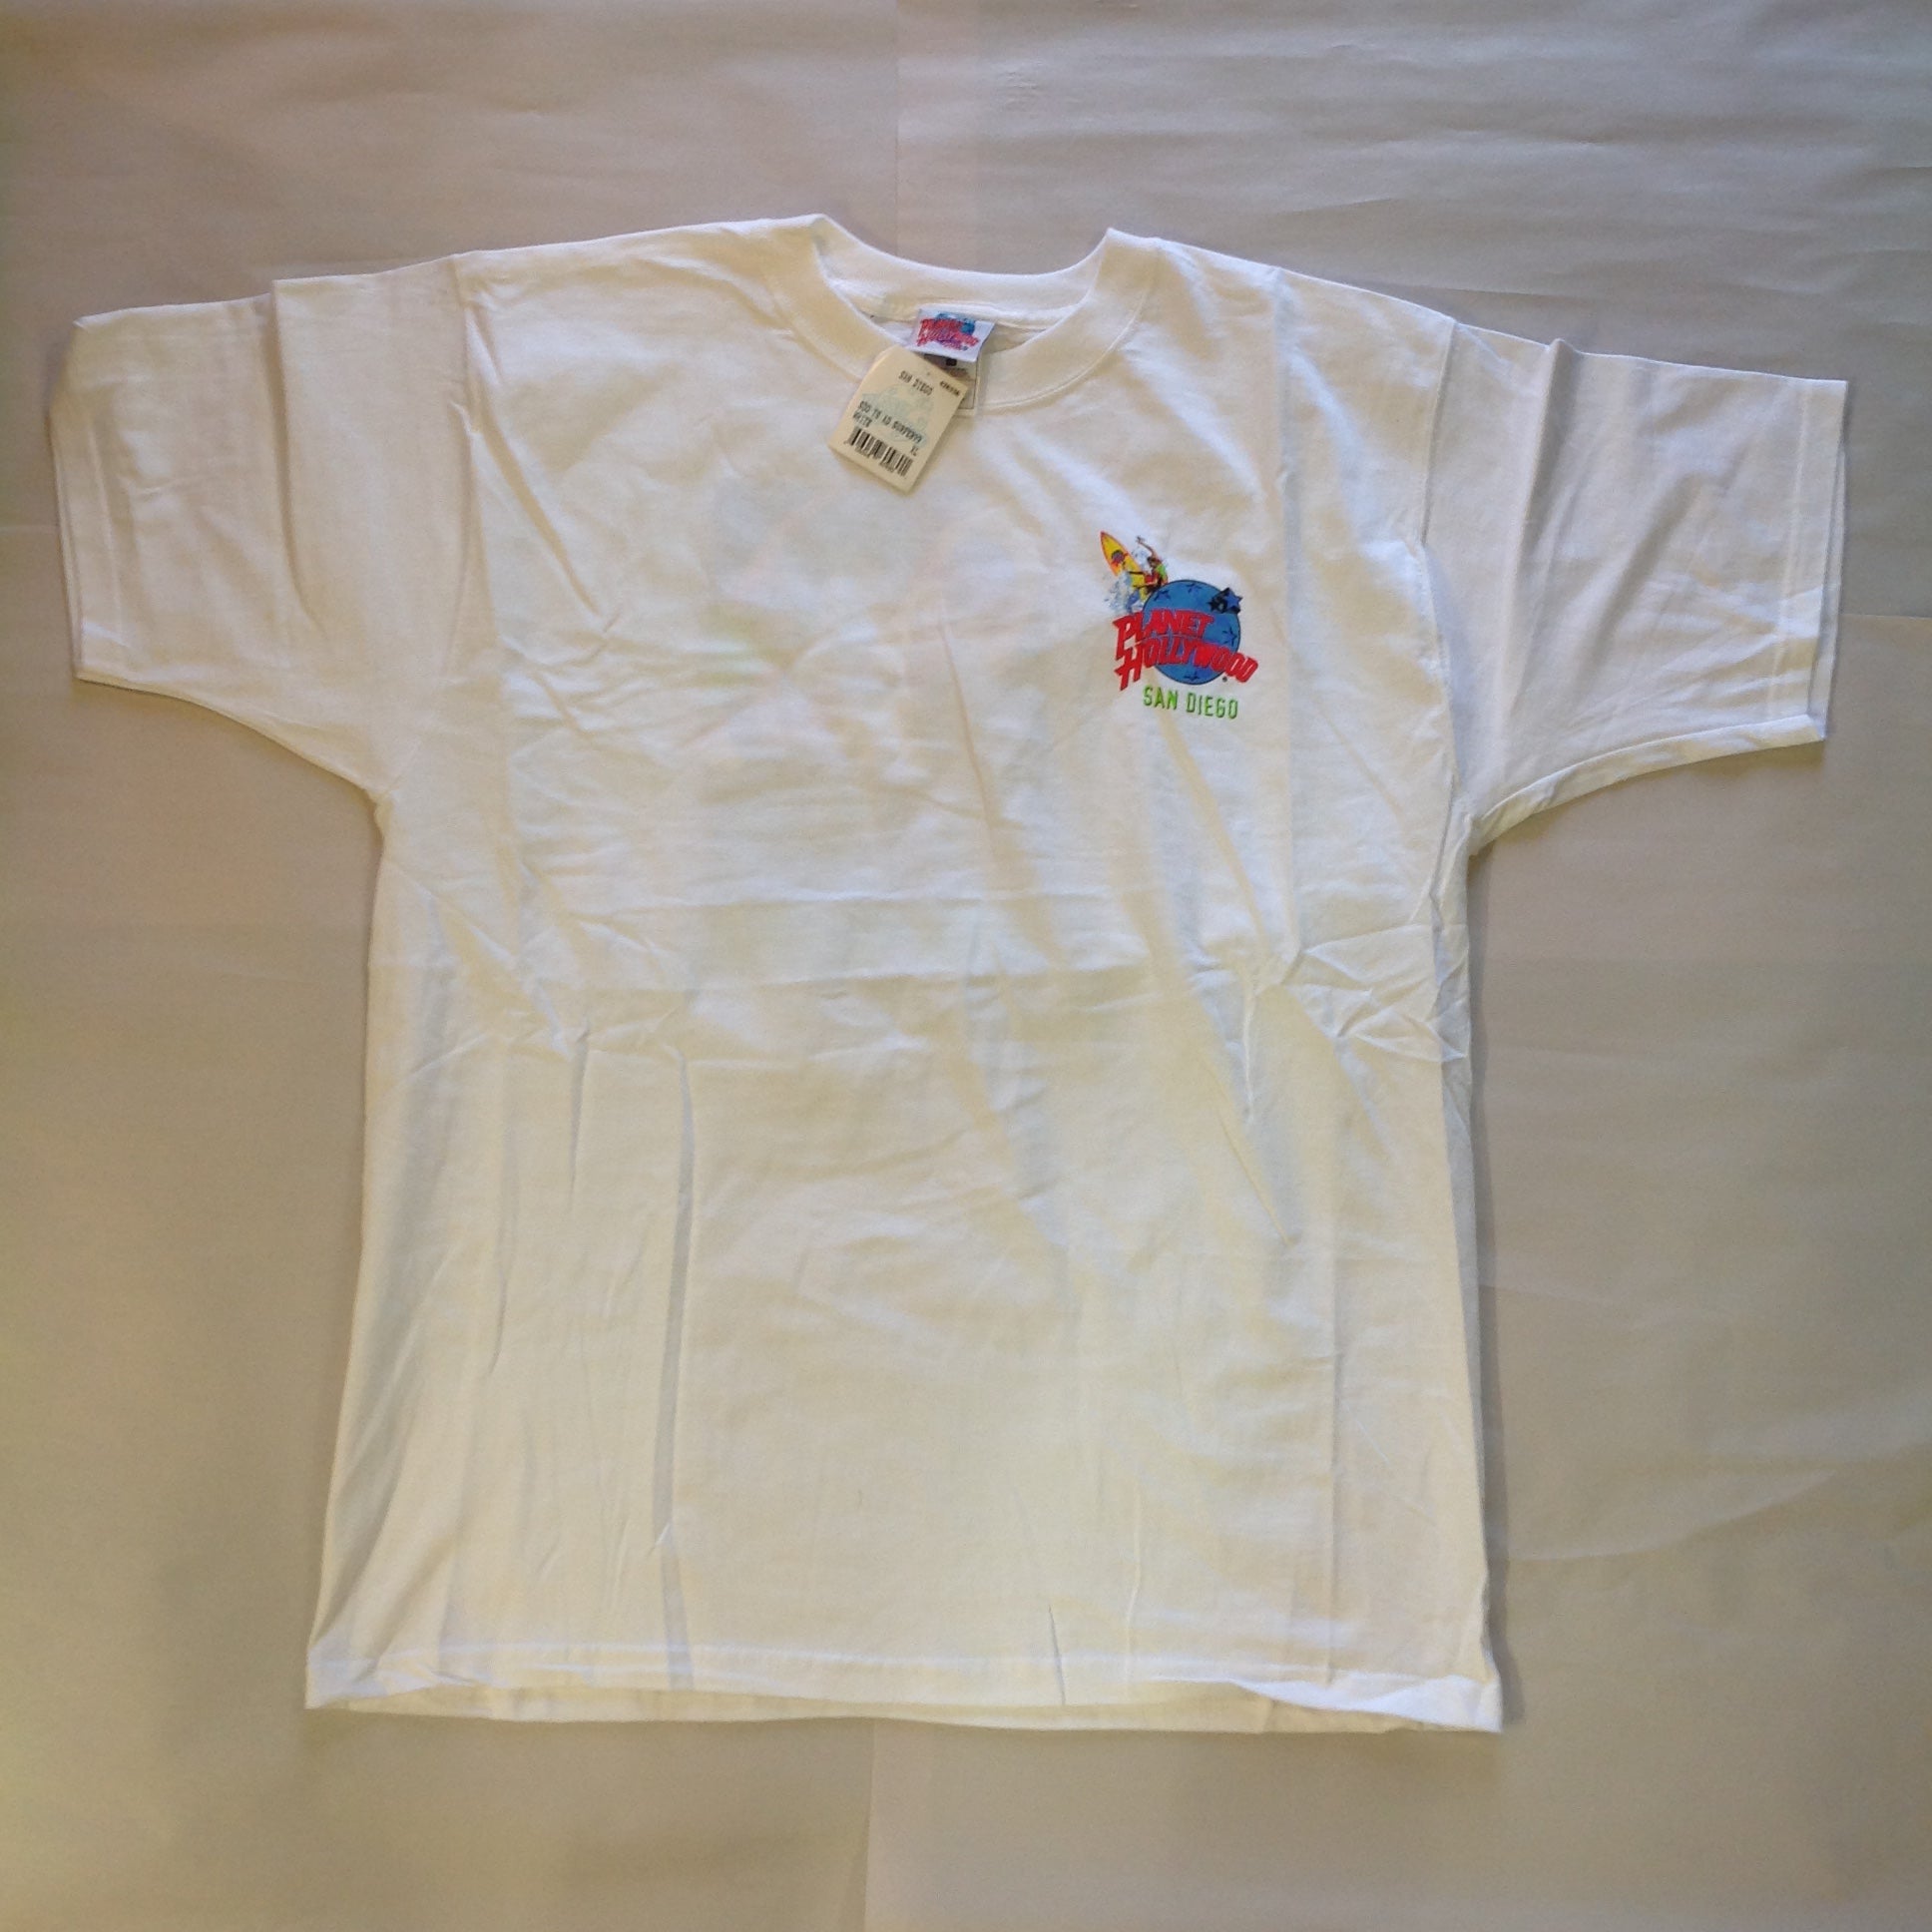 Vintage 1998 Men's XL White Cotton Short Sleeve Authentic Souvenir Planet Hollywood San Diego T-Shirt with Tags